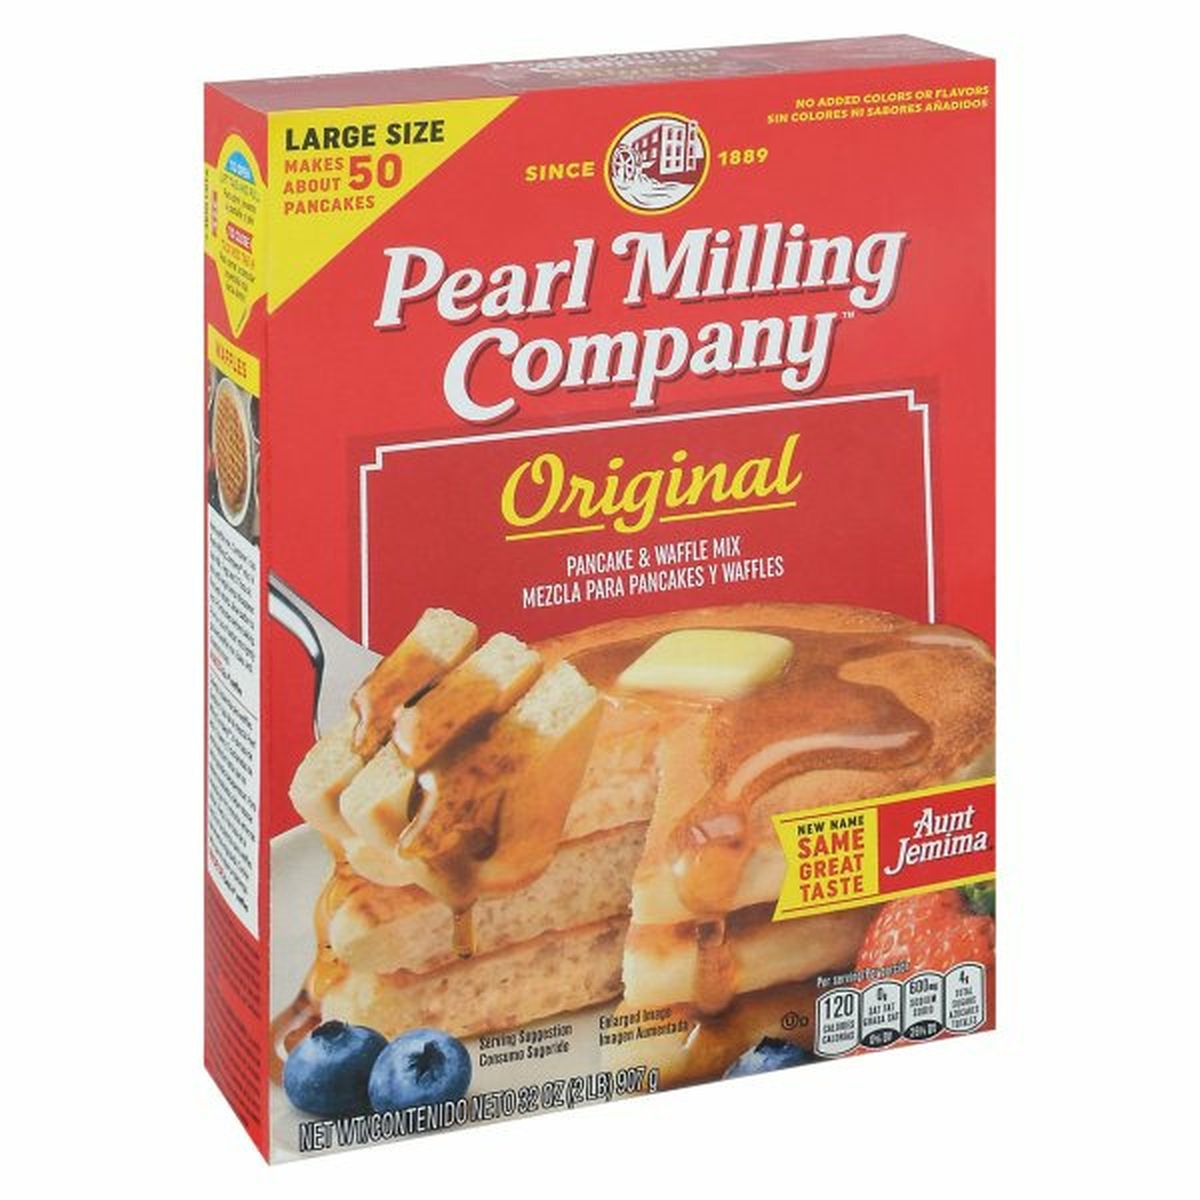 Calories in Pearl Milling Company Pancake & Waffle Mix, Original